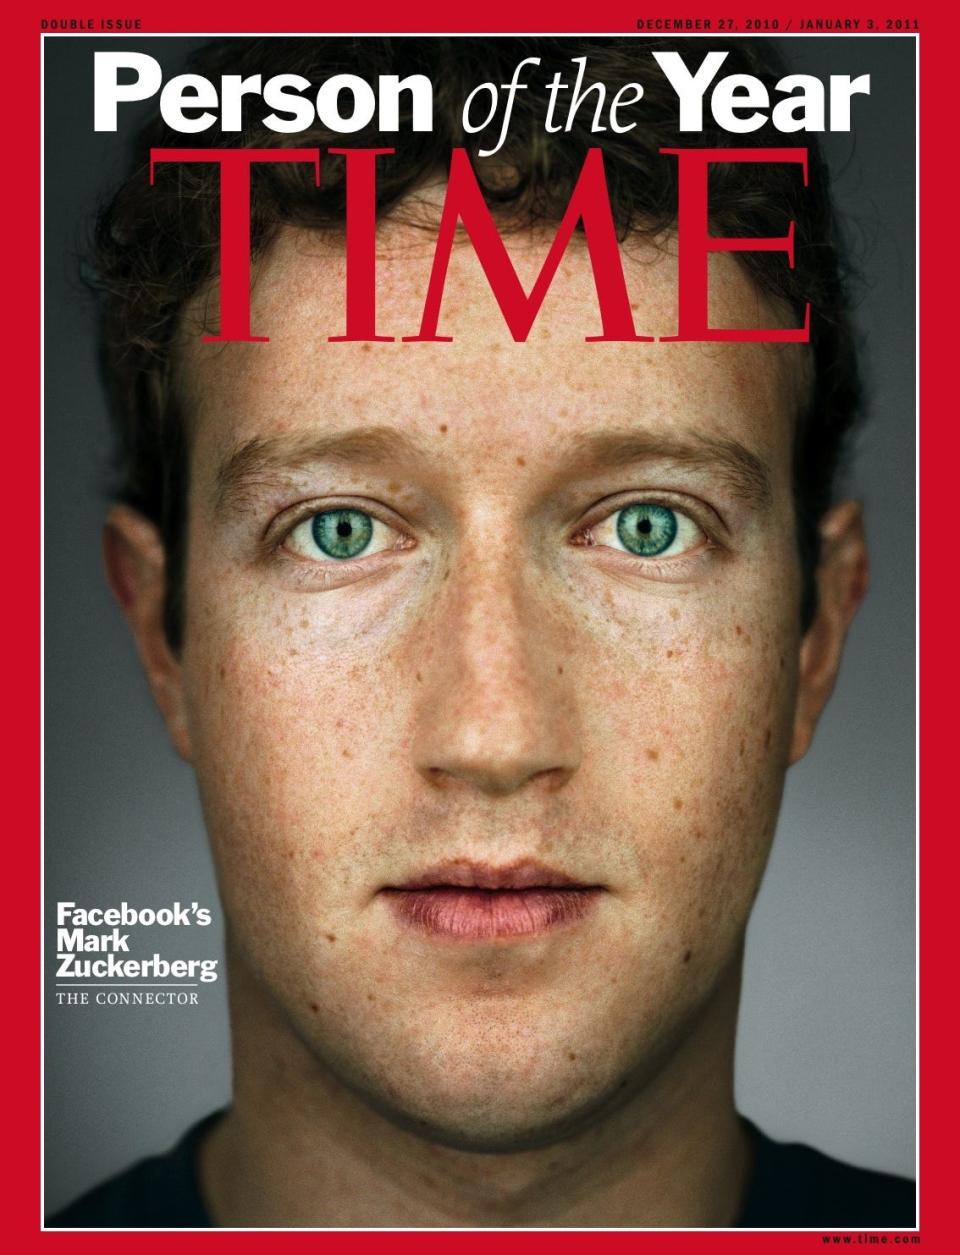 mark zuckerberg time magazine person of the year 2010 copy